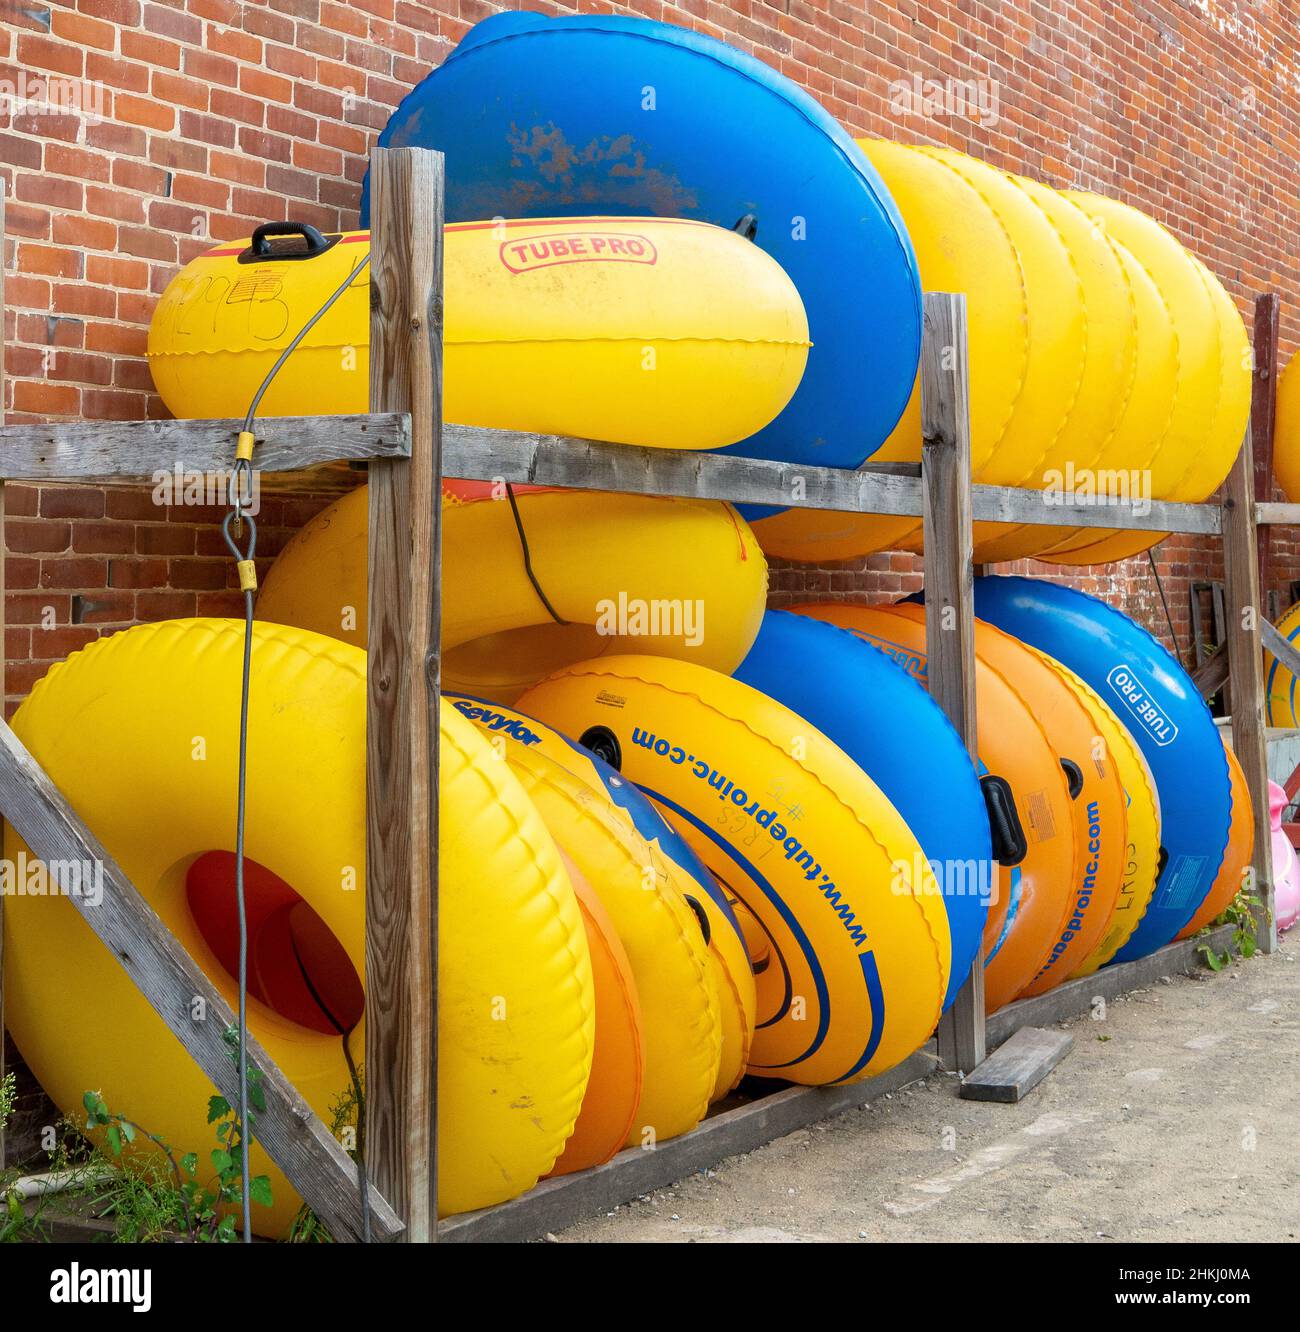 LANESBORO, MN - 26 AUG 2019: Stacks of yellow and blue inner tubes Stock Photo